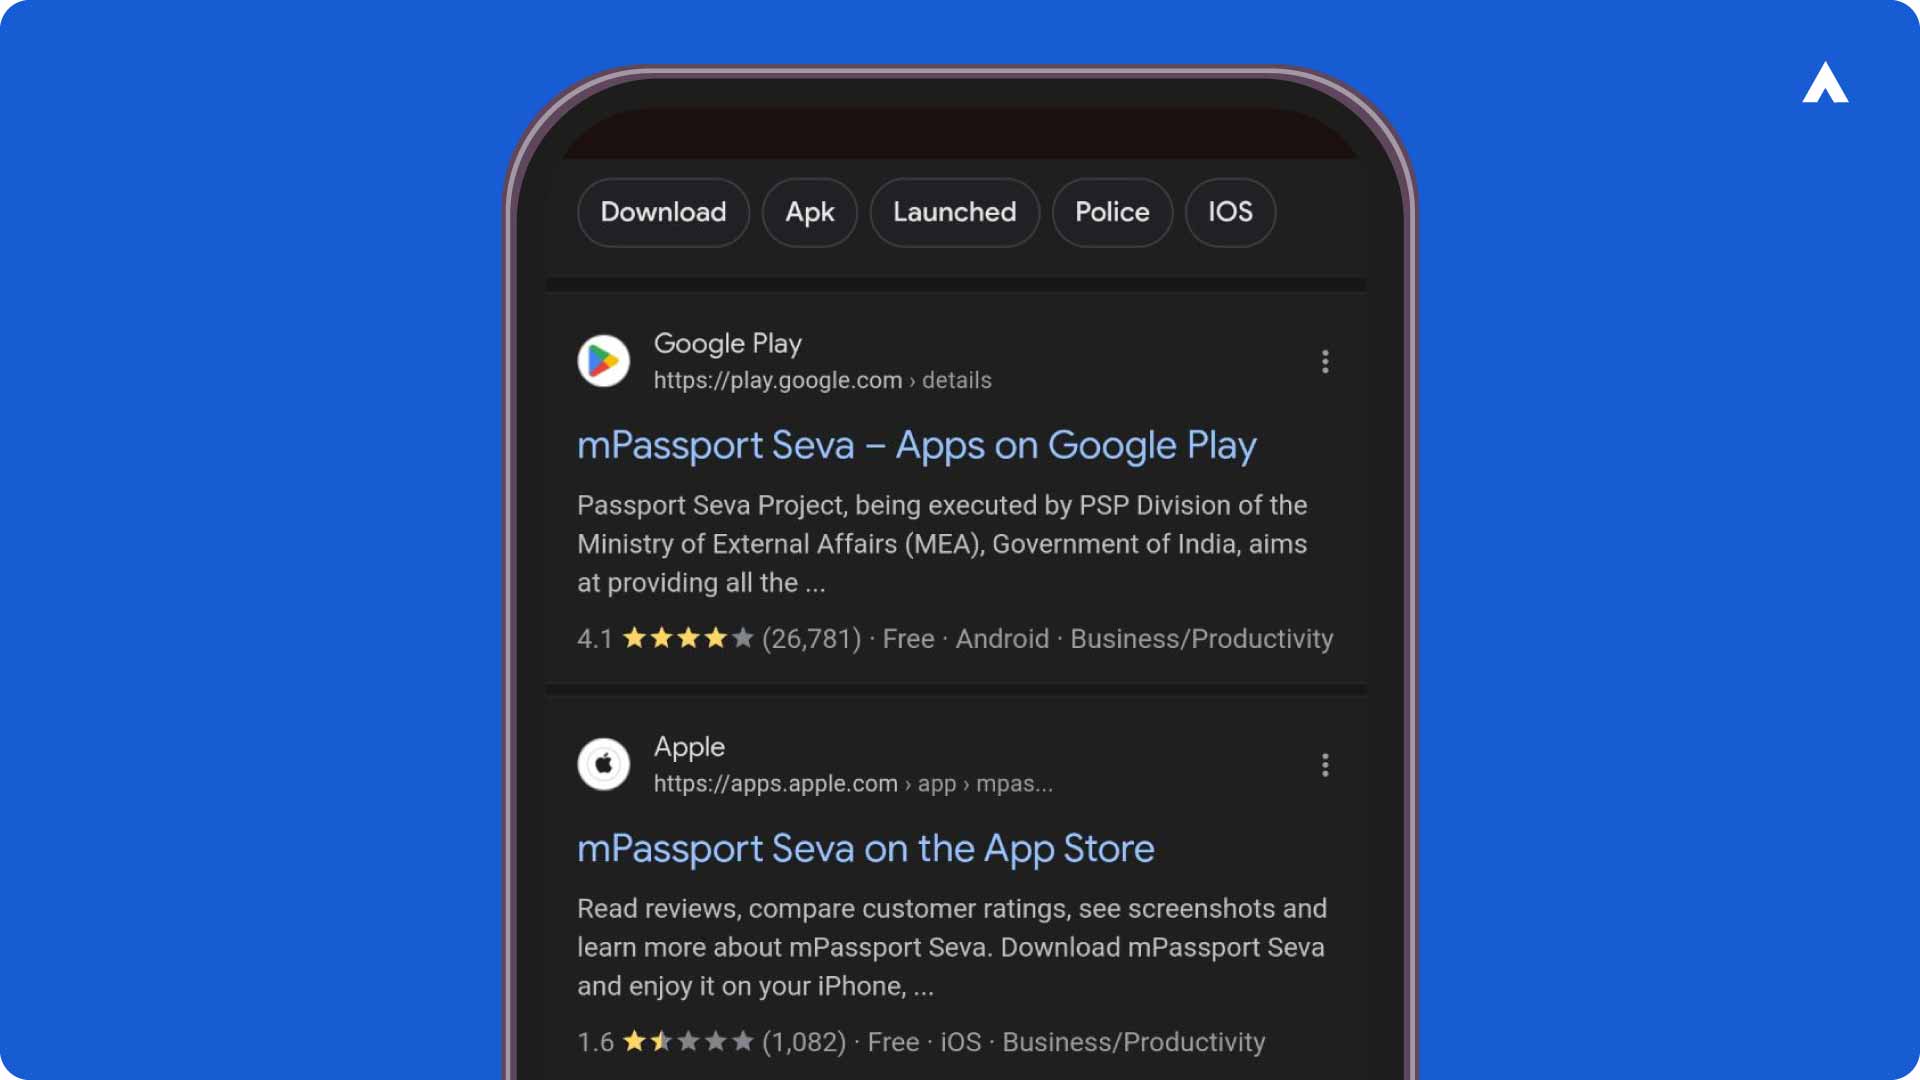 mPassport Seva App listing on Google Play Store, App Store